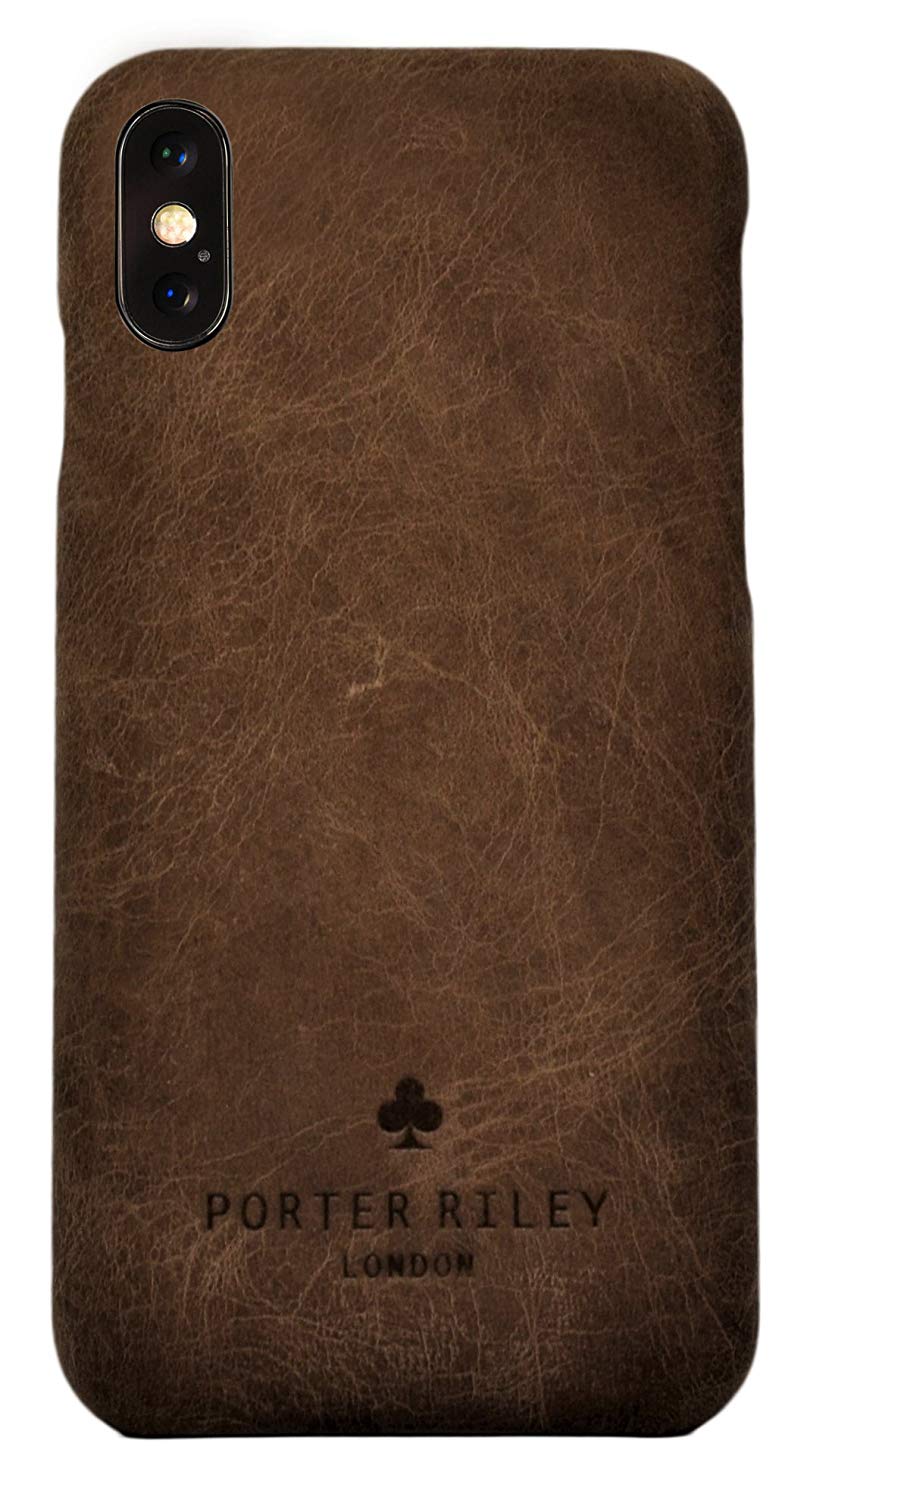 iPhone XS Max Leather Case. Premium Slimline Back Genuine Leather Case (Chocolate Brown)